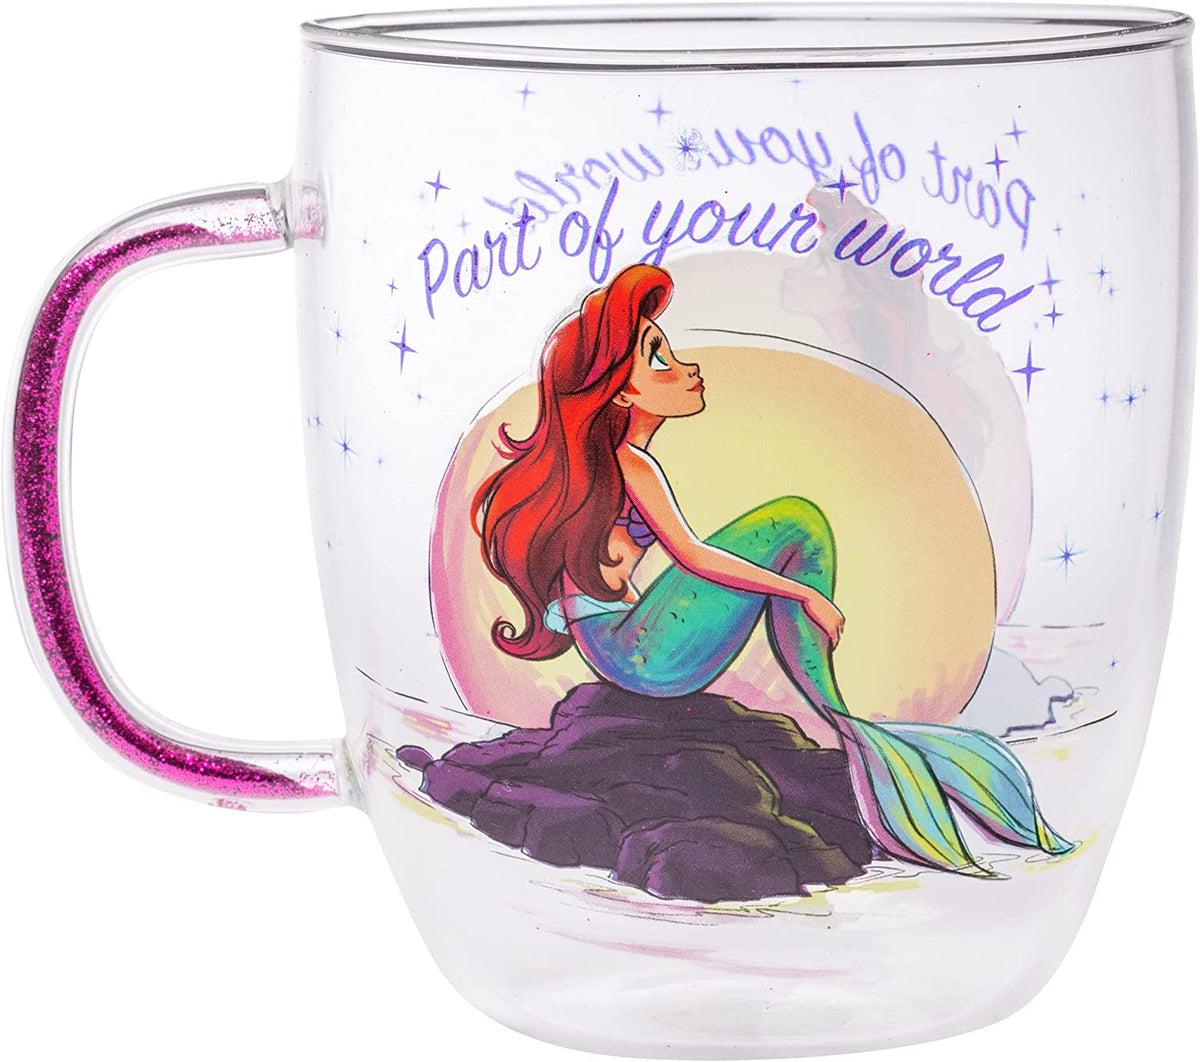 The Cranberry Mermaid Mug